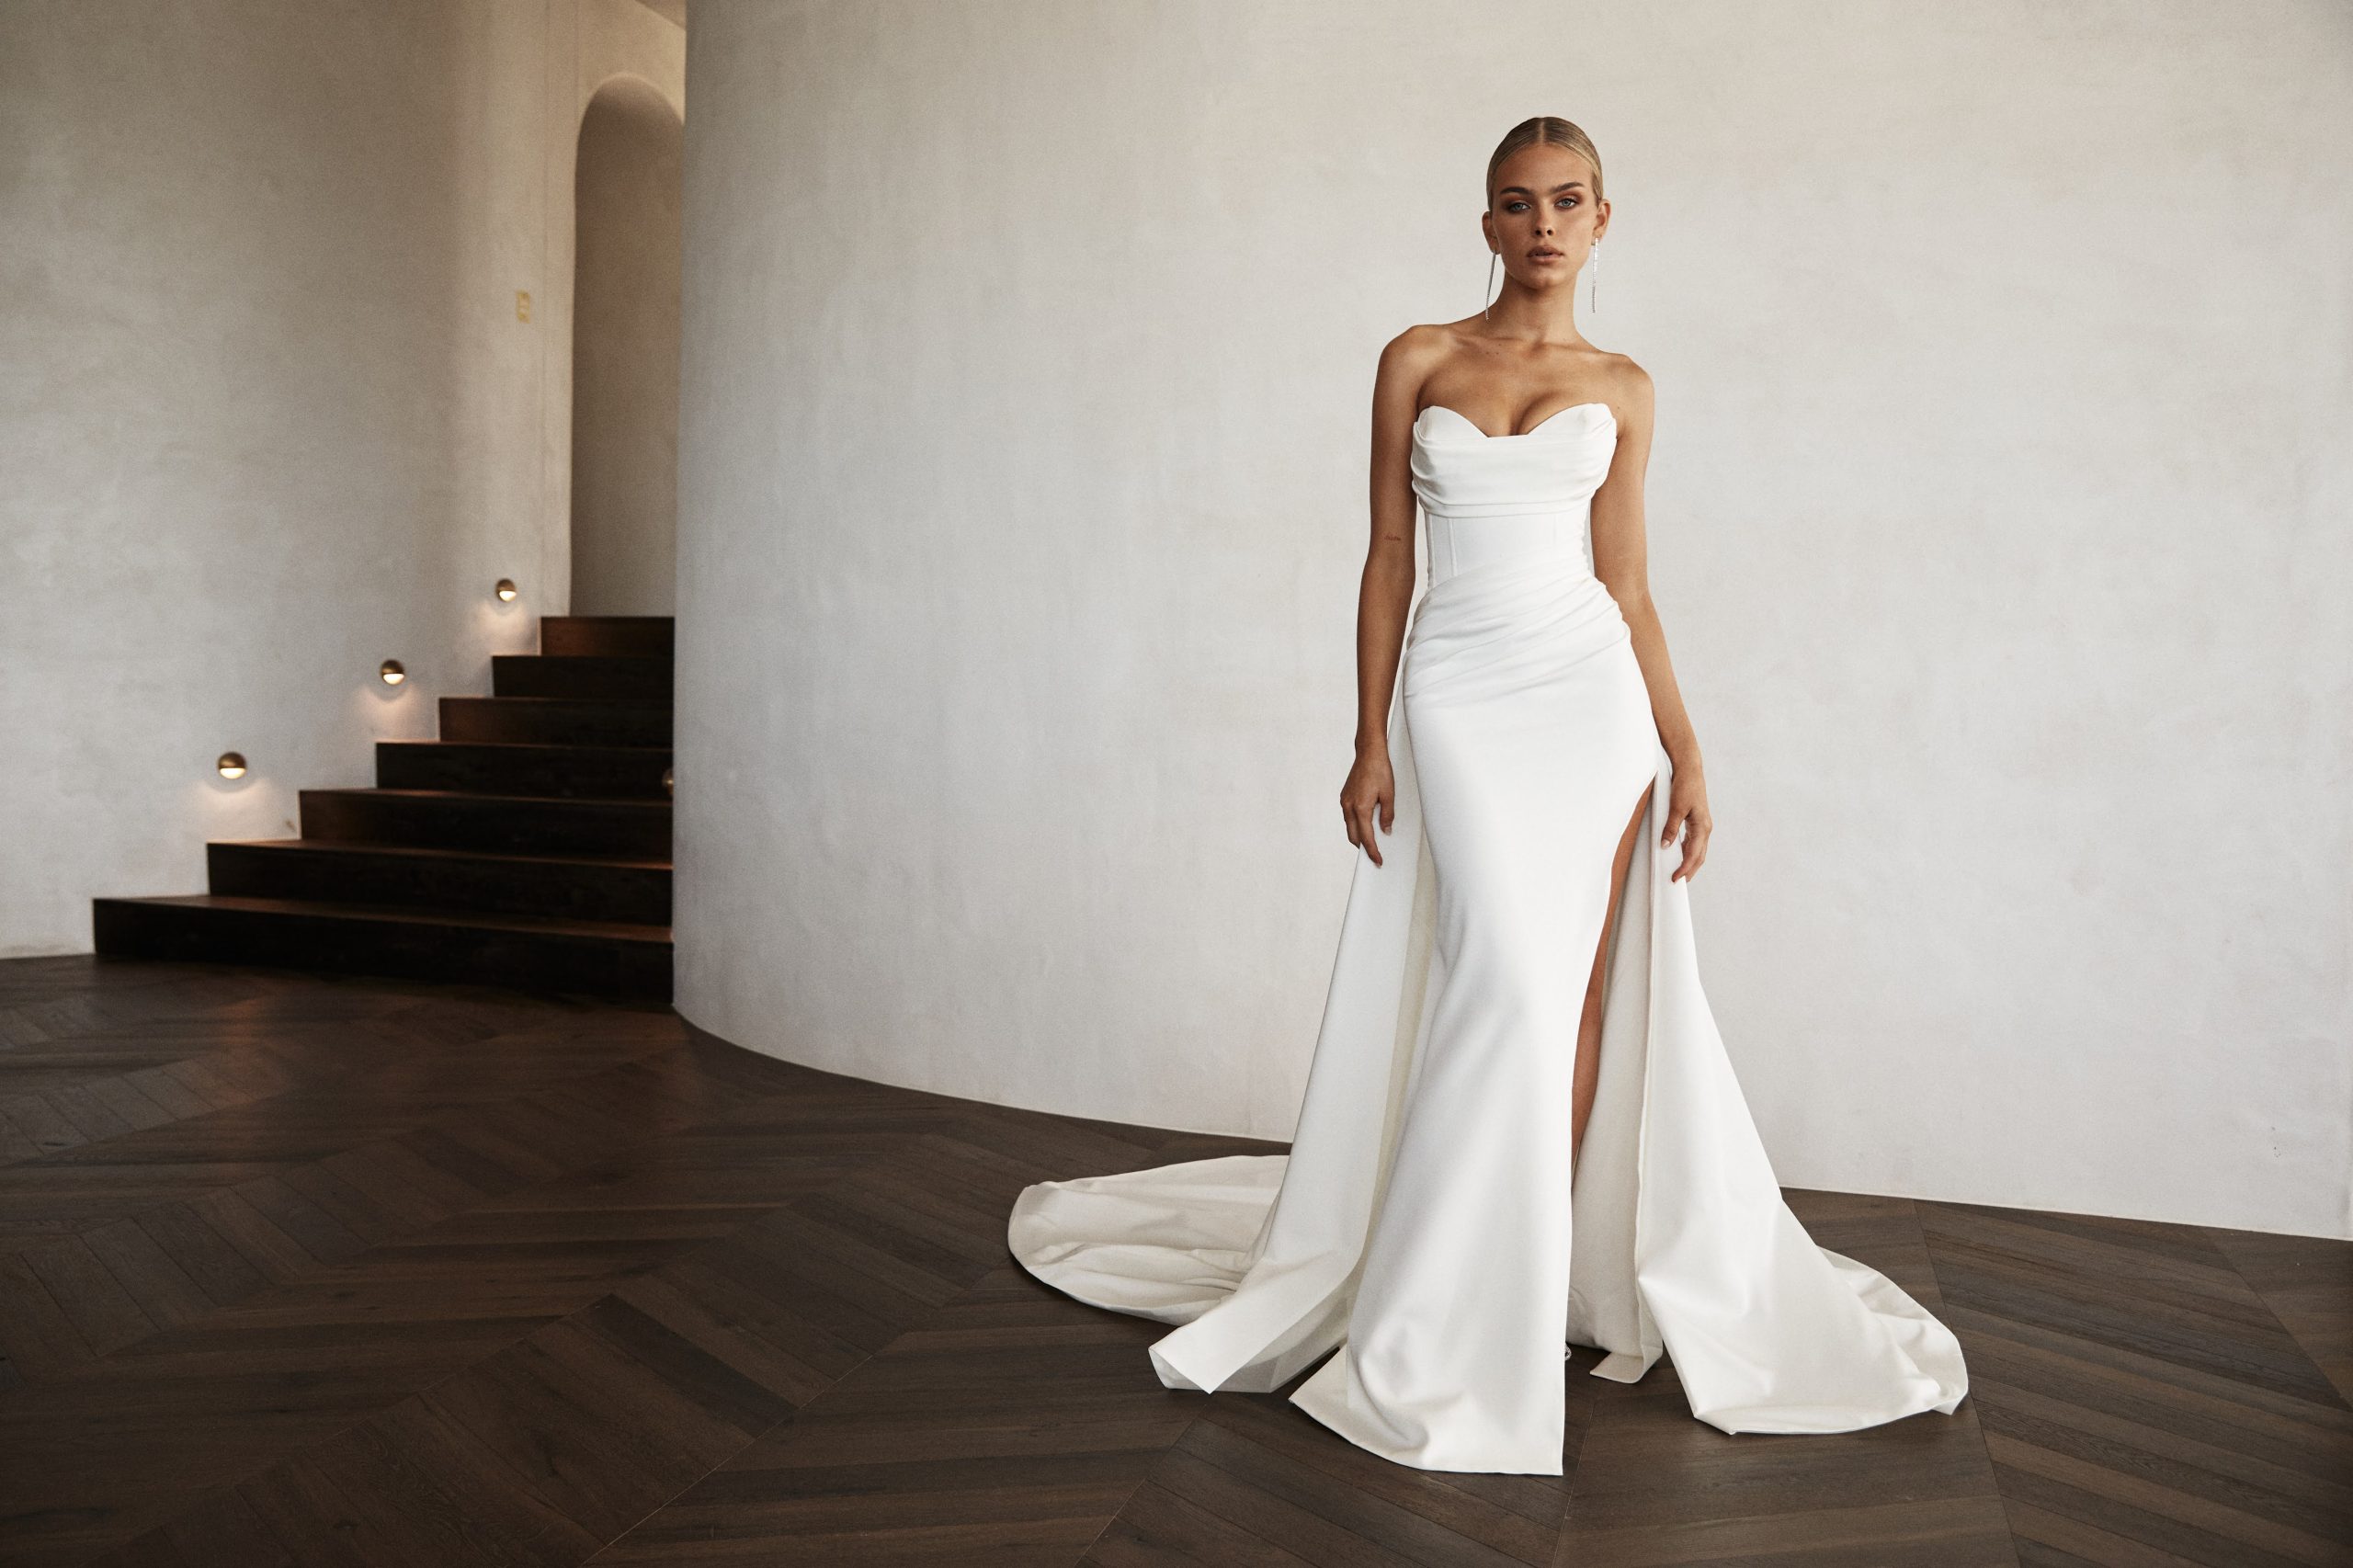 Scoop Neck Wedding Dresses - Largest Selection - Kleinfeld